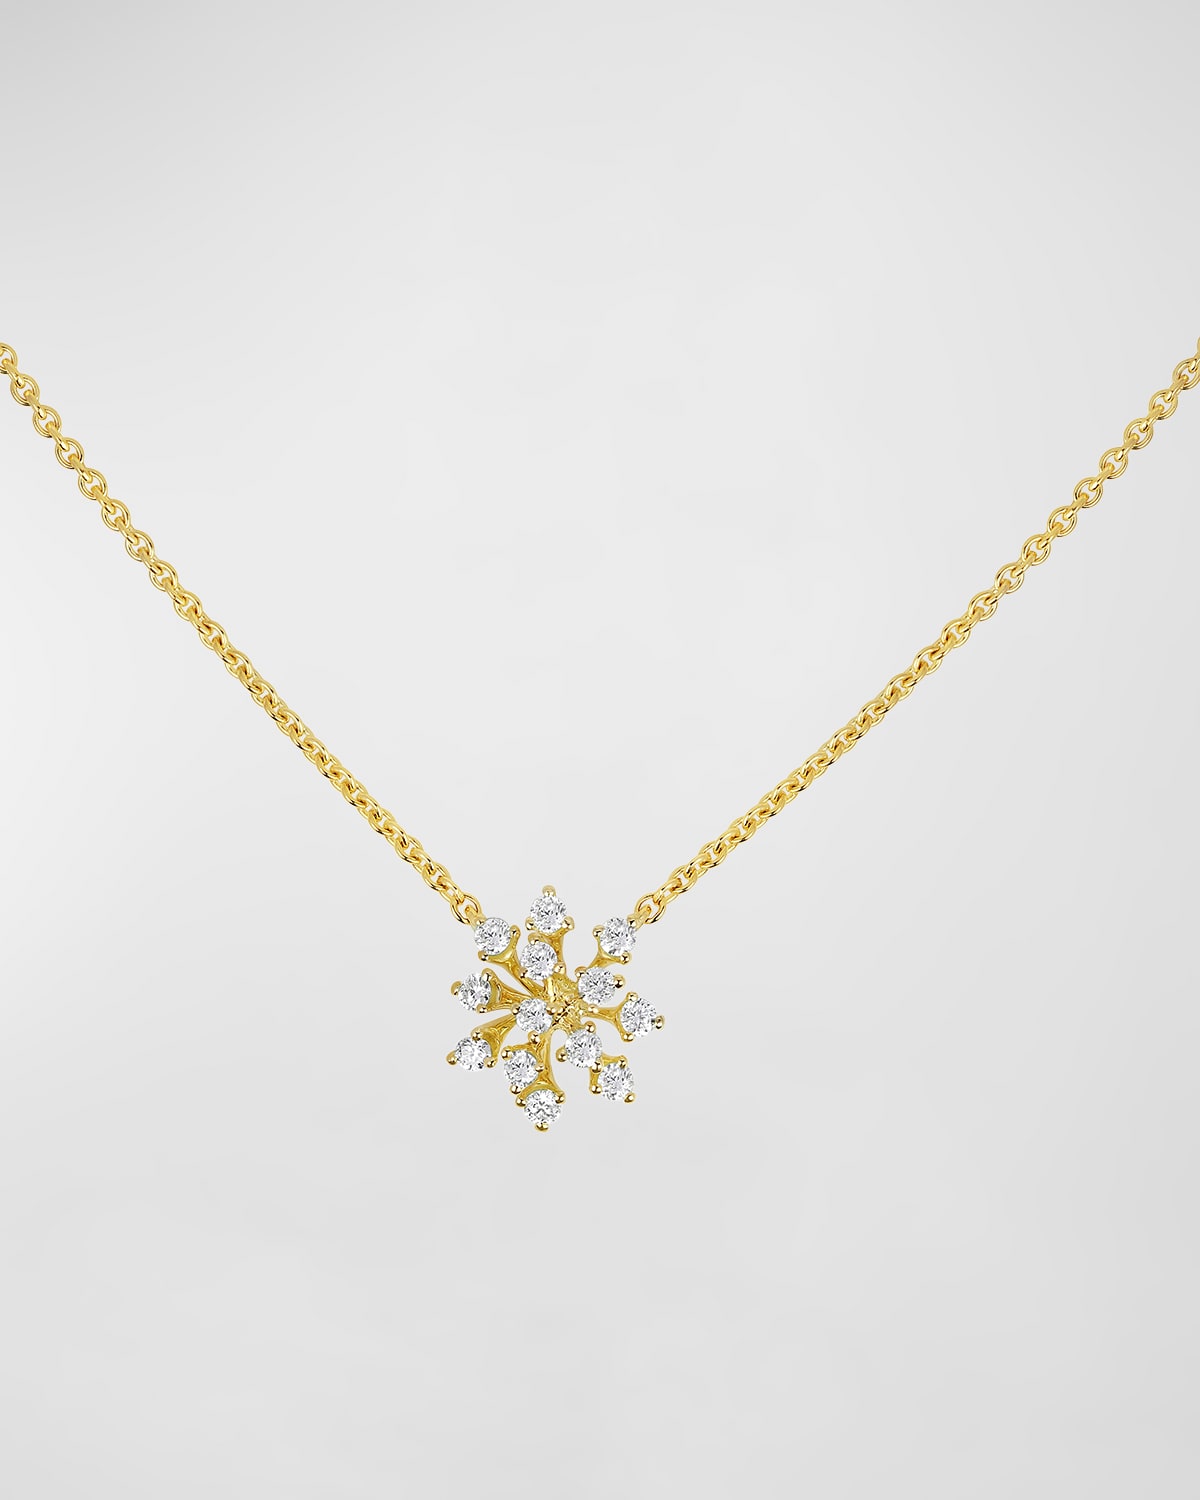 18K Luminous Gold Diamond Pendant Necklace, 16"